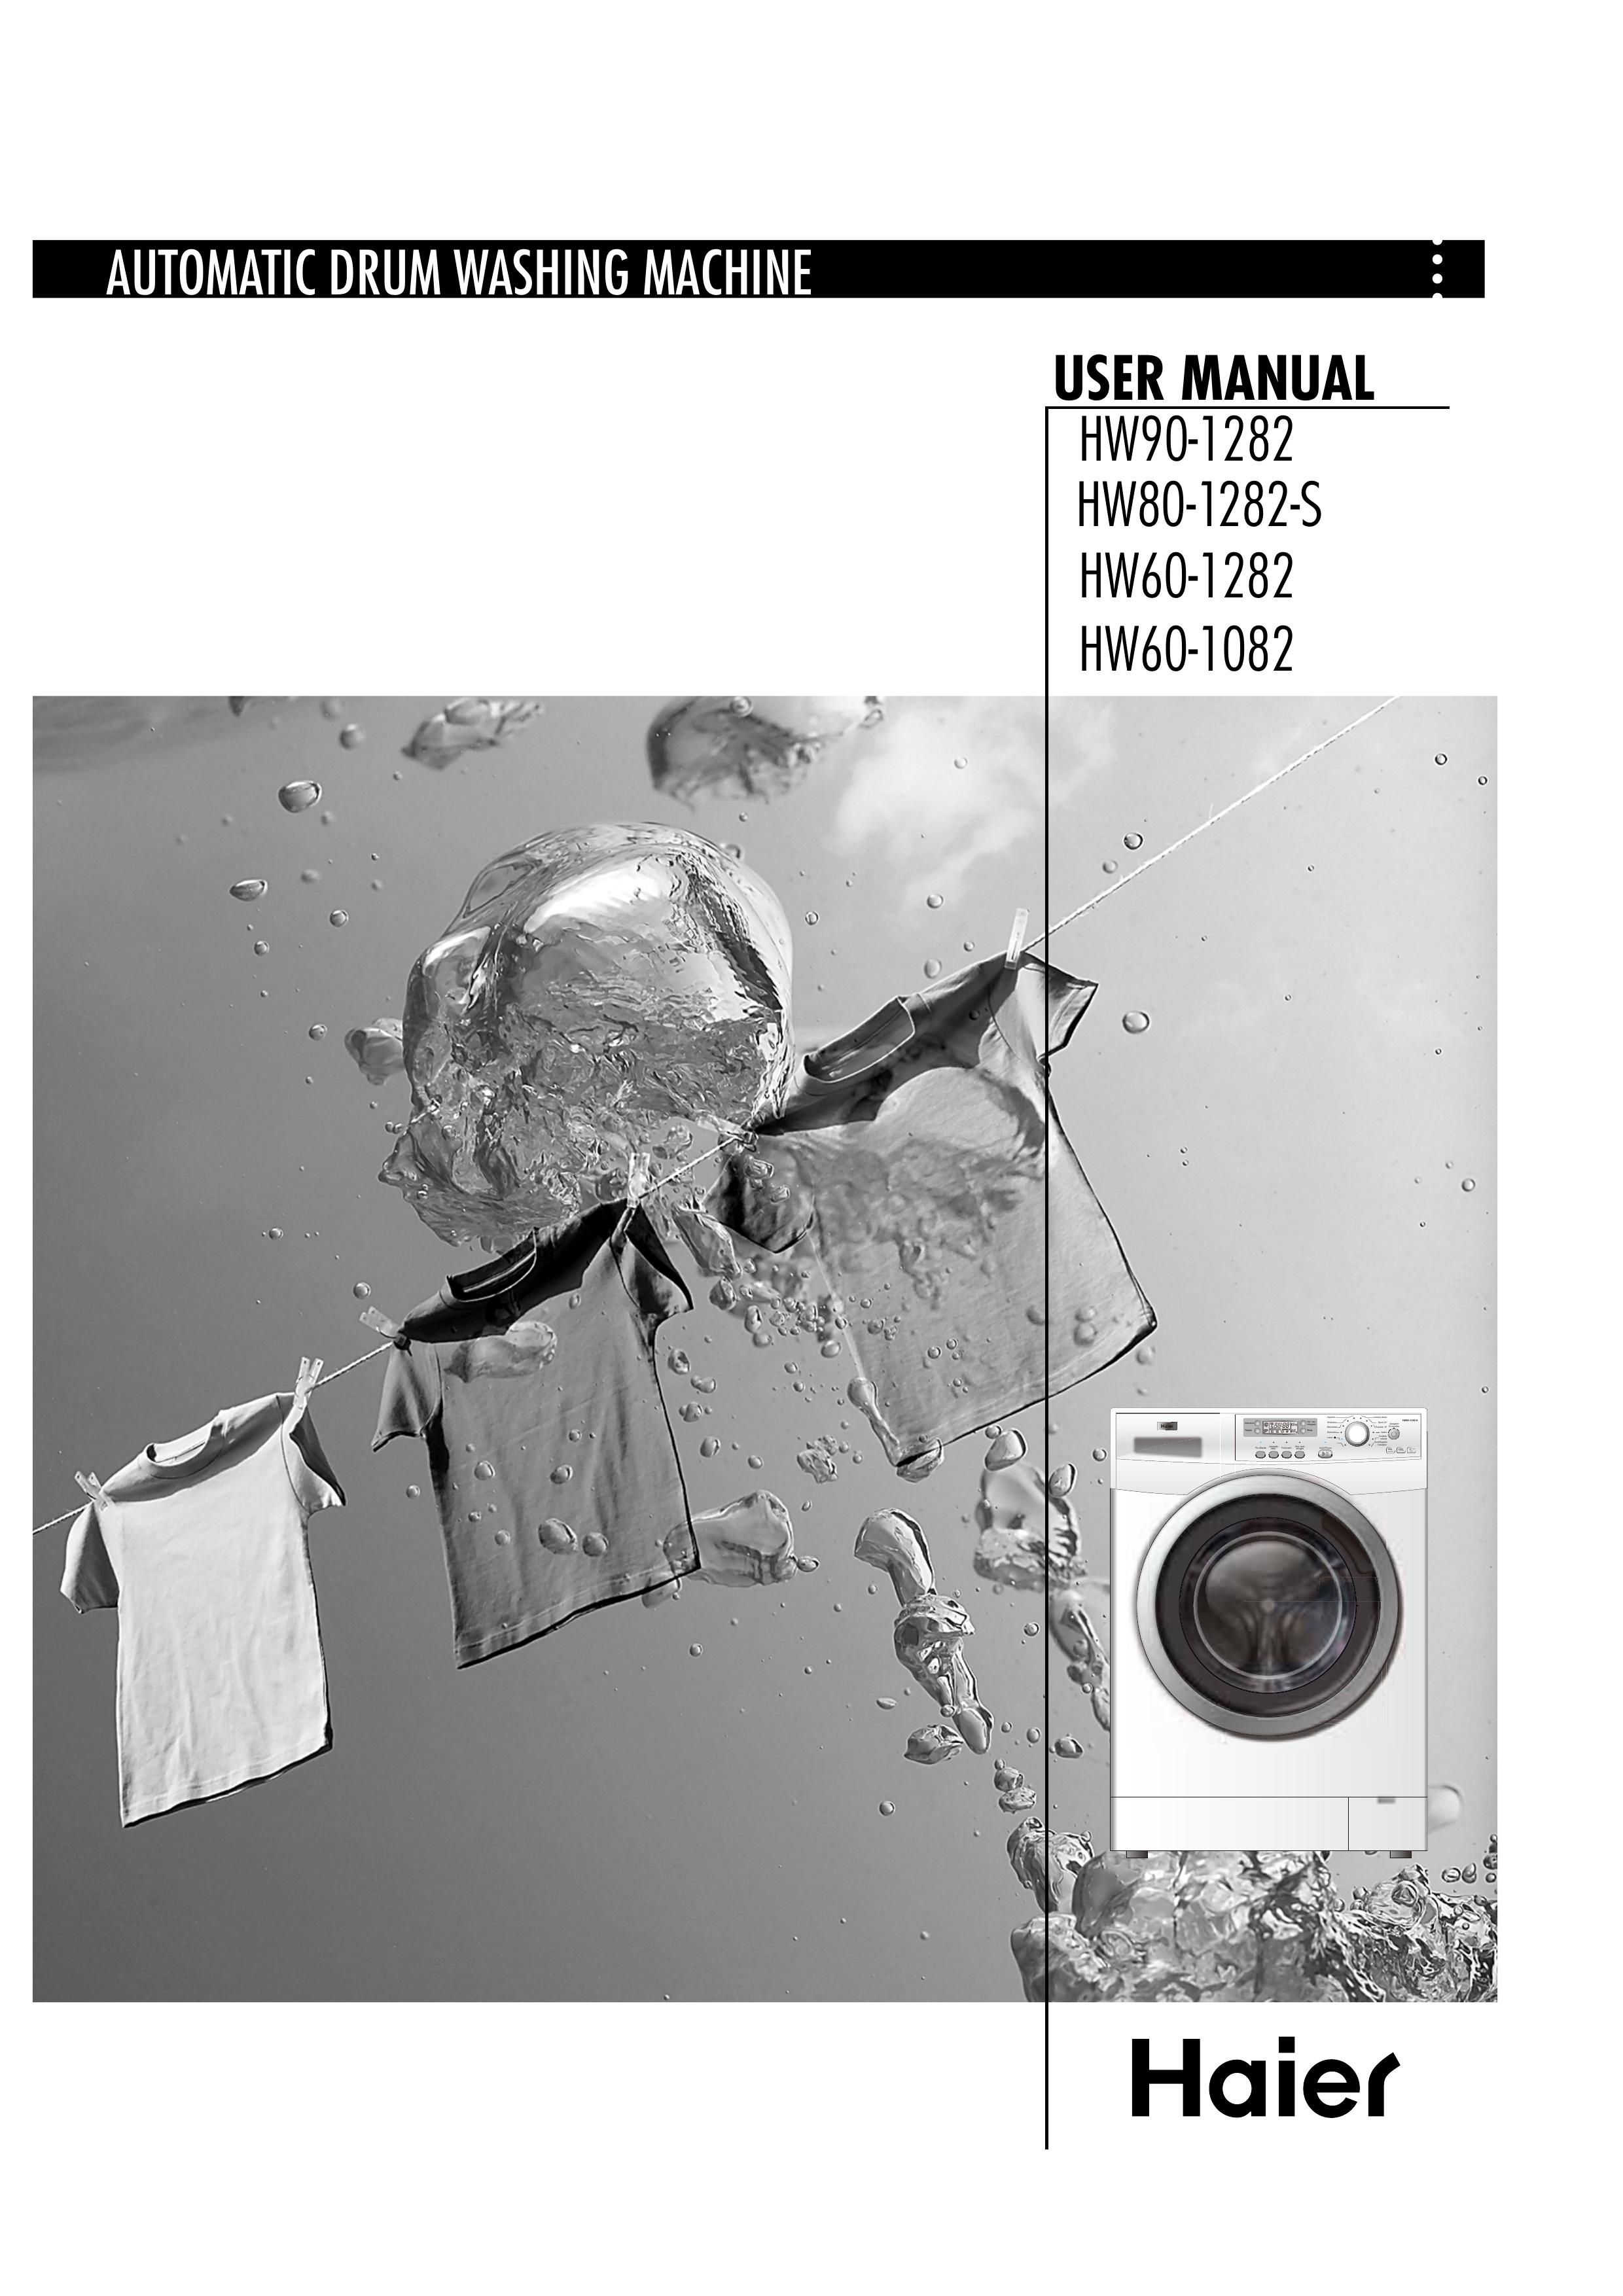 Haier HW90-1282 Washer/Dryer User Manual